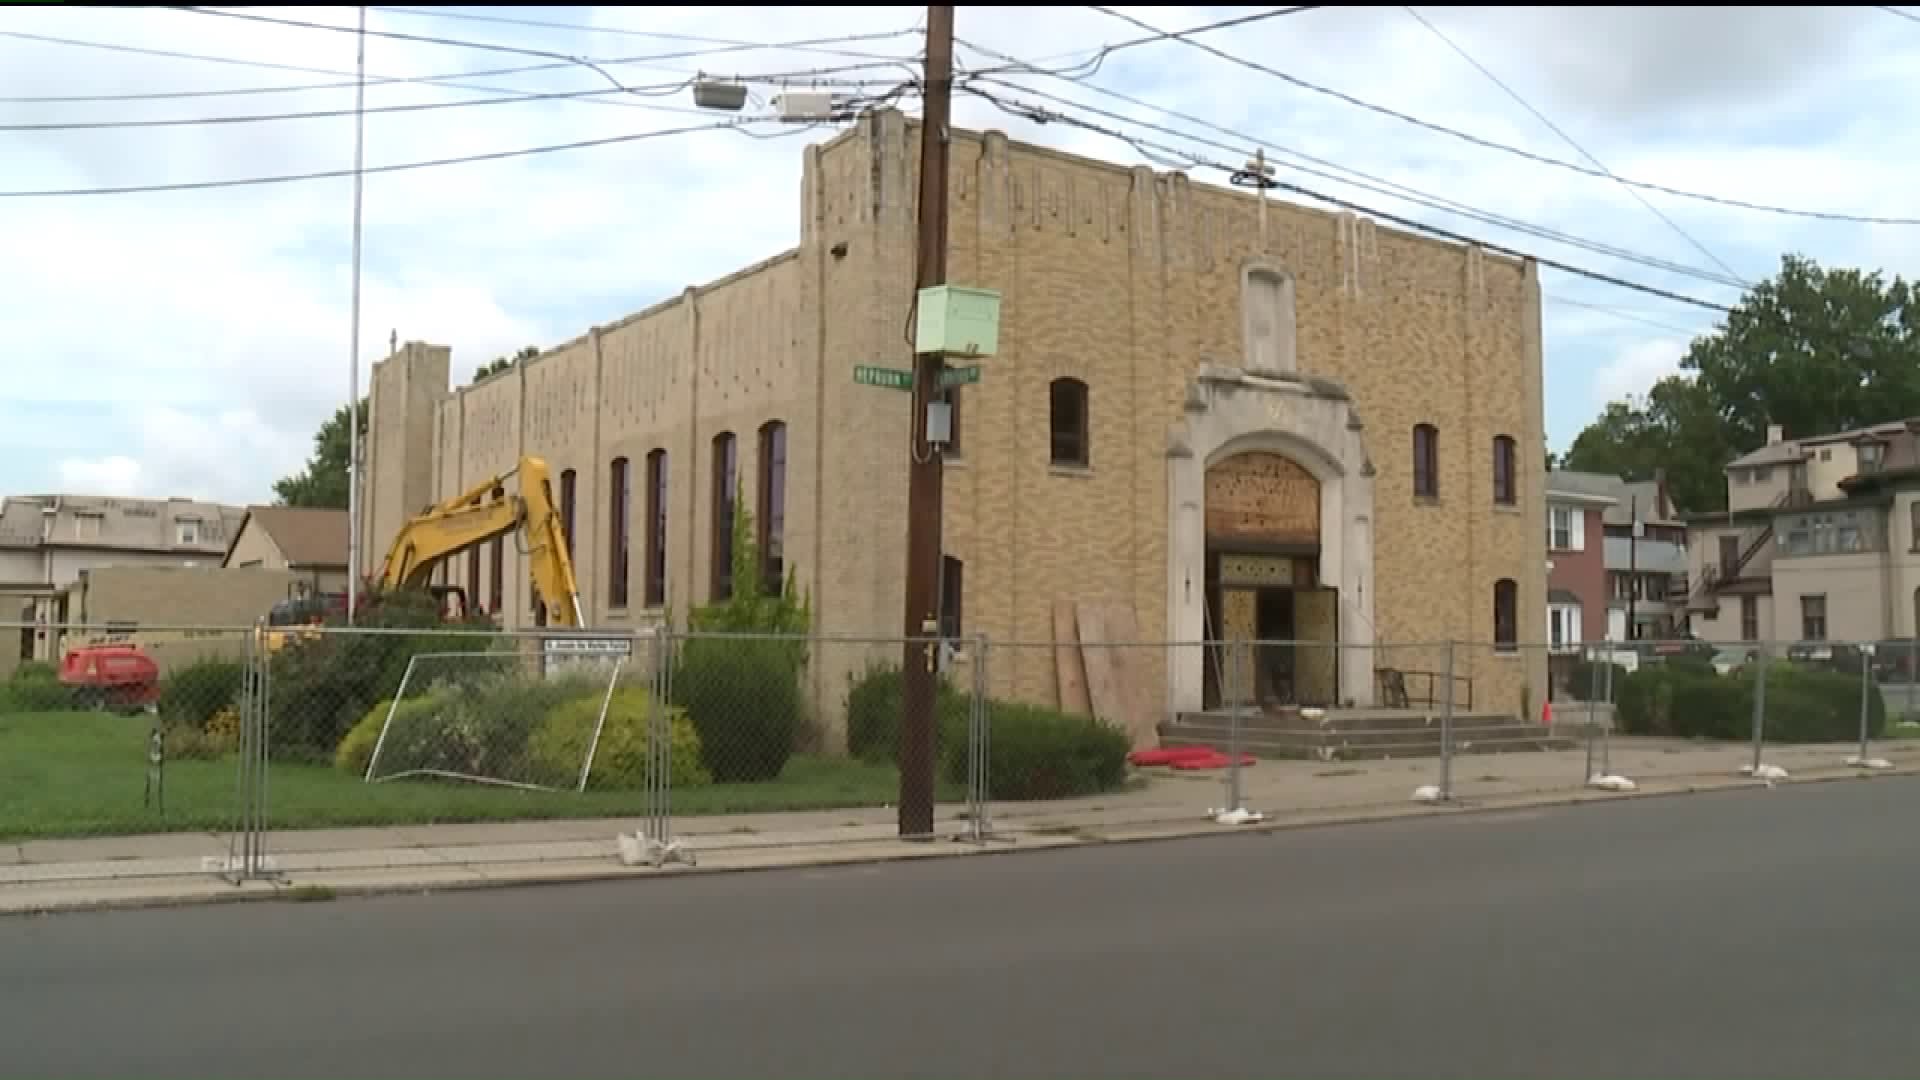 Catholic Church in Williamsport Torn Down